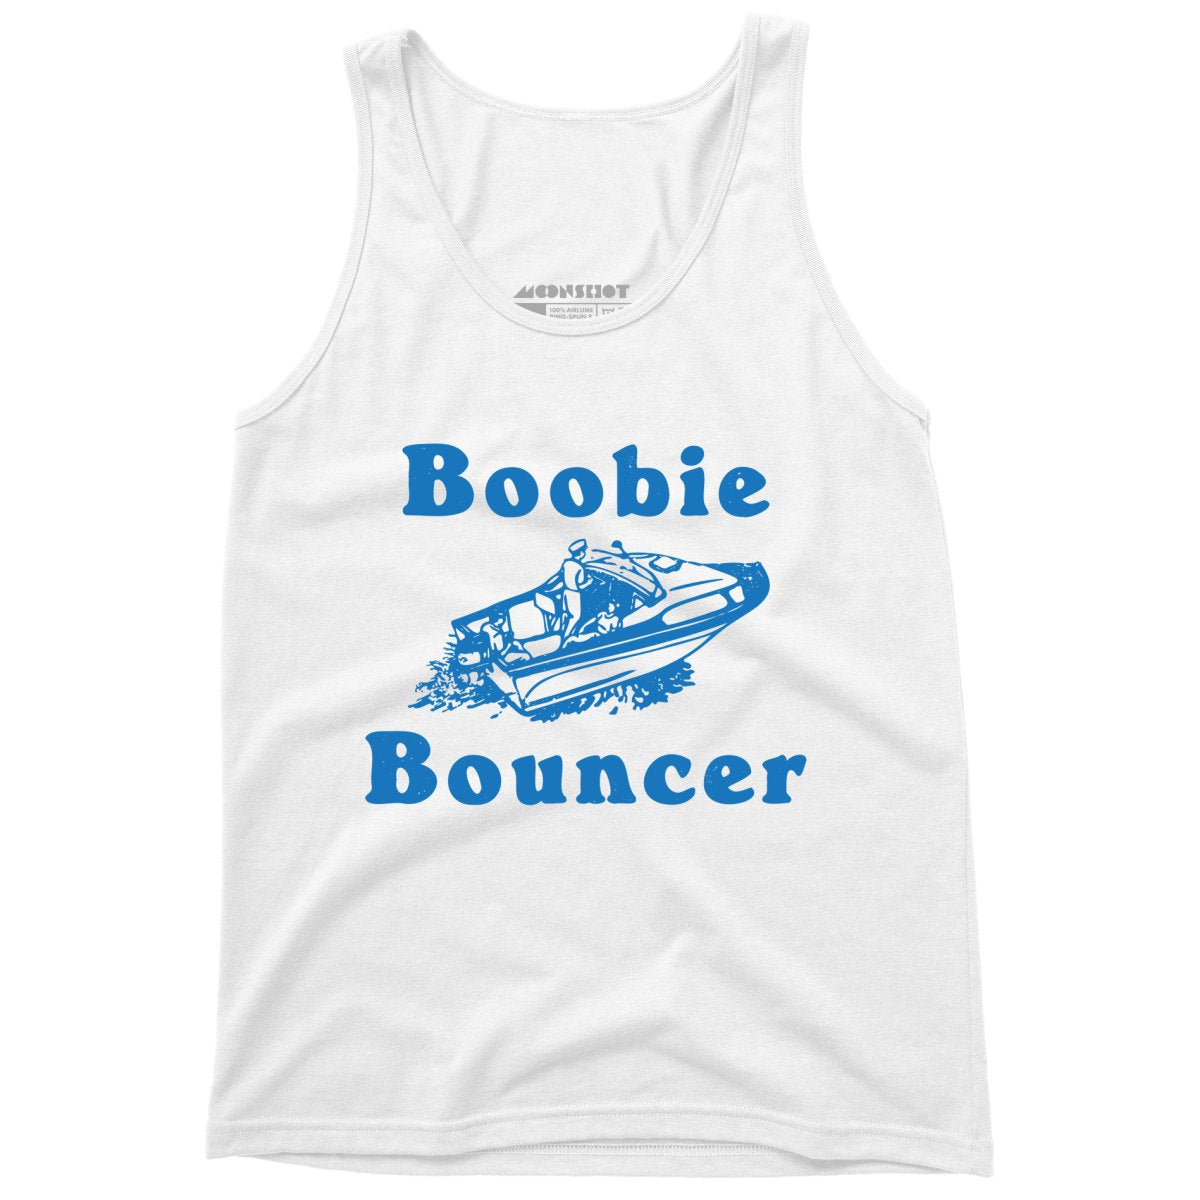 Boobie Bouncer - Unisex Tank Top